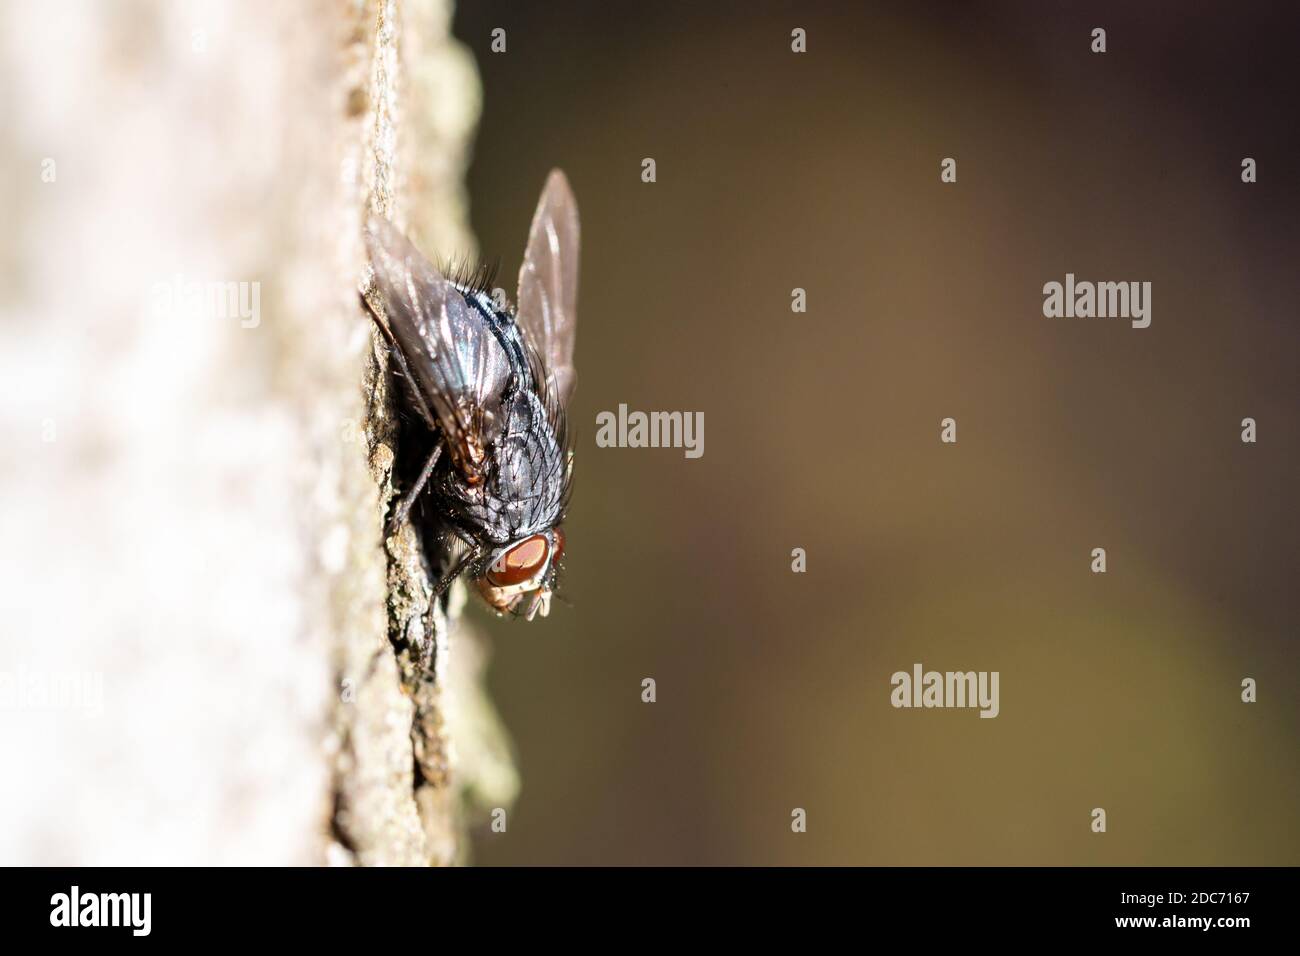 A macro image close up of a blowfly latin name Calliphora using selective focus Stock Photo